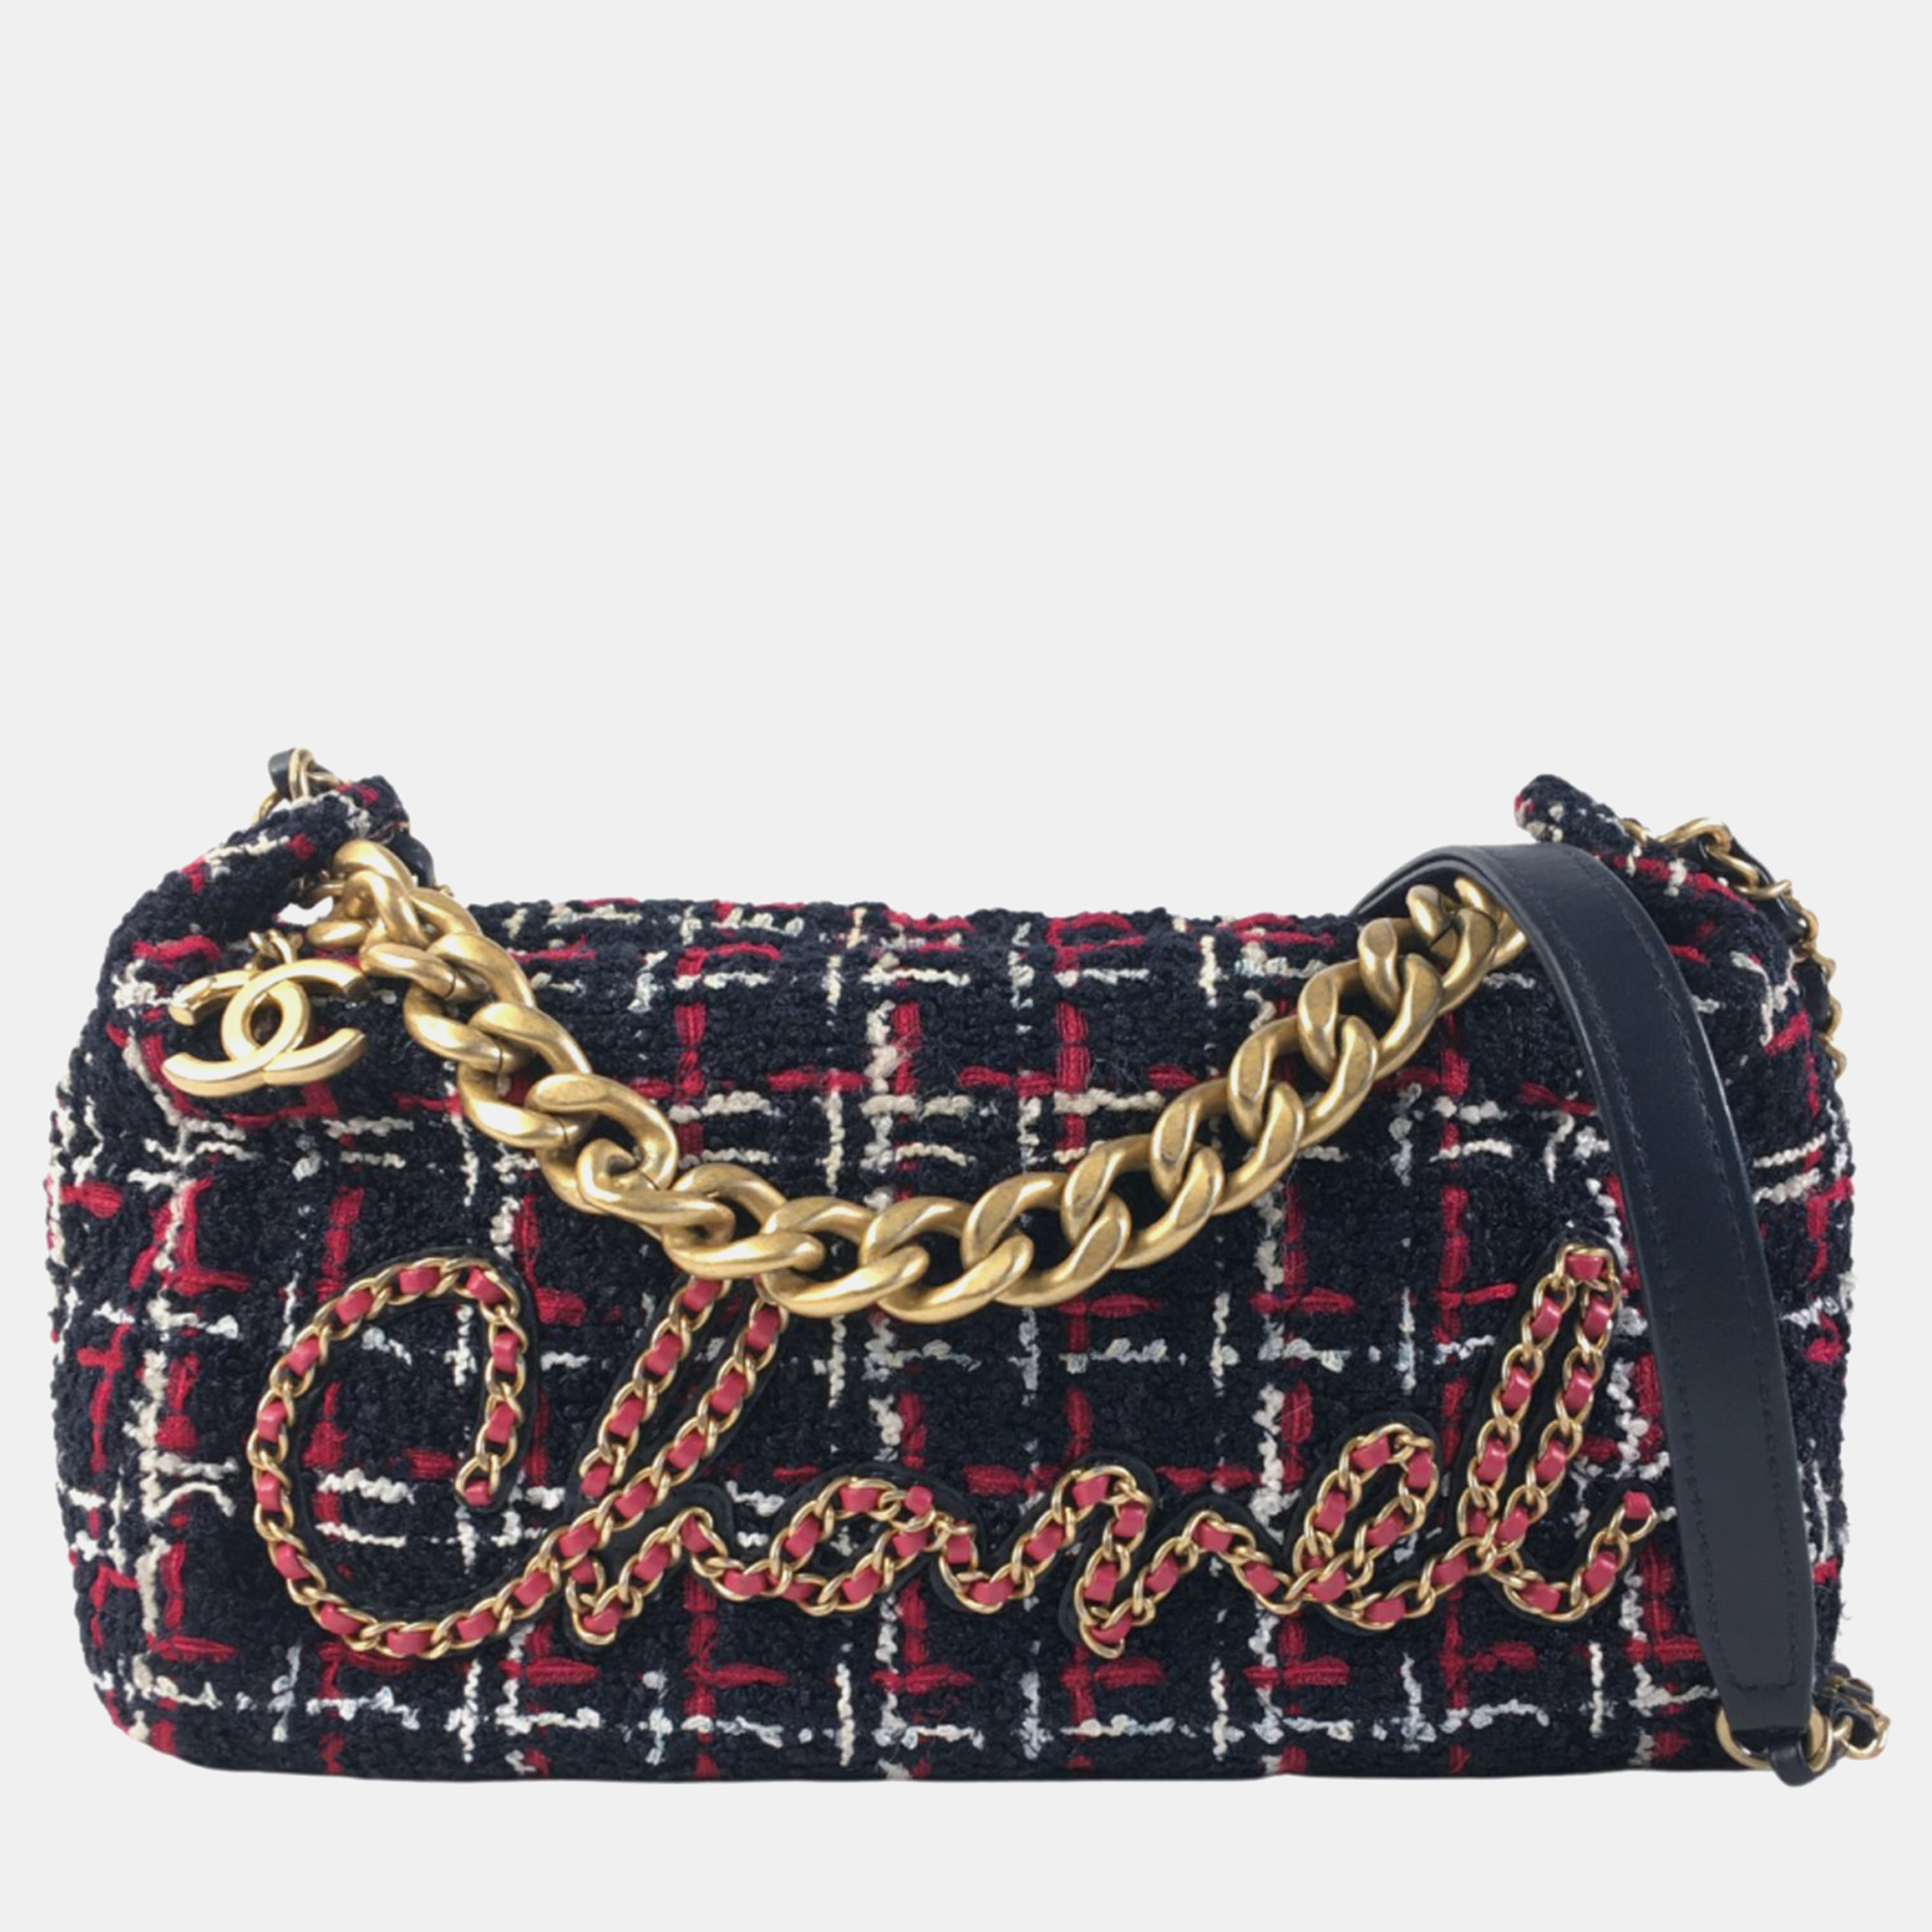 Chanel red black tweed calfskin signe bowling bag